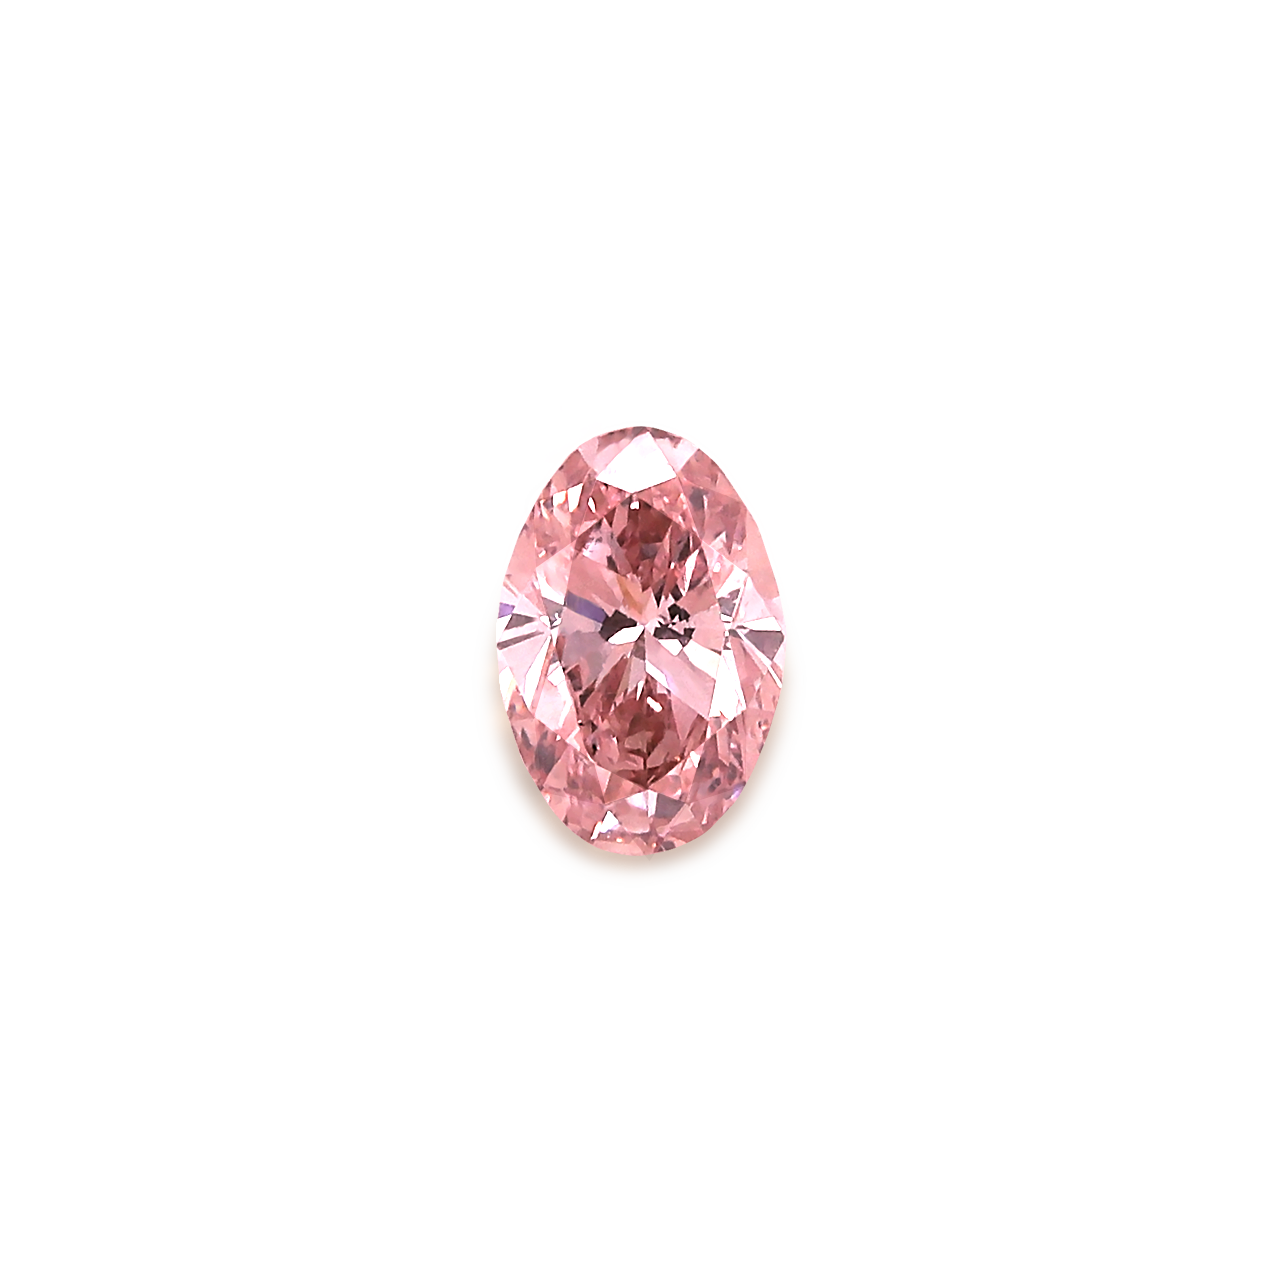 0.95克拉 阿蓋爾裸石
Unmounted Argyle Pink Colored Diamond